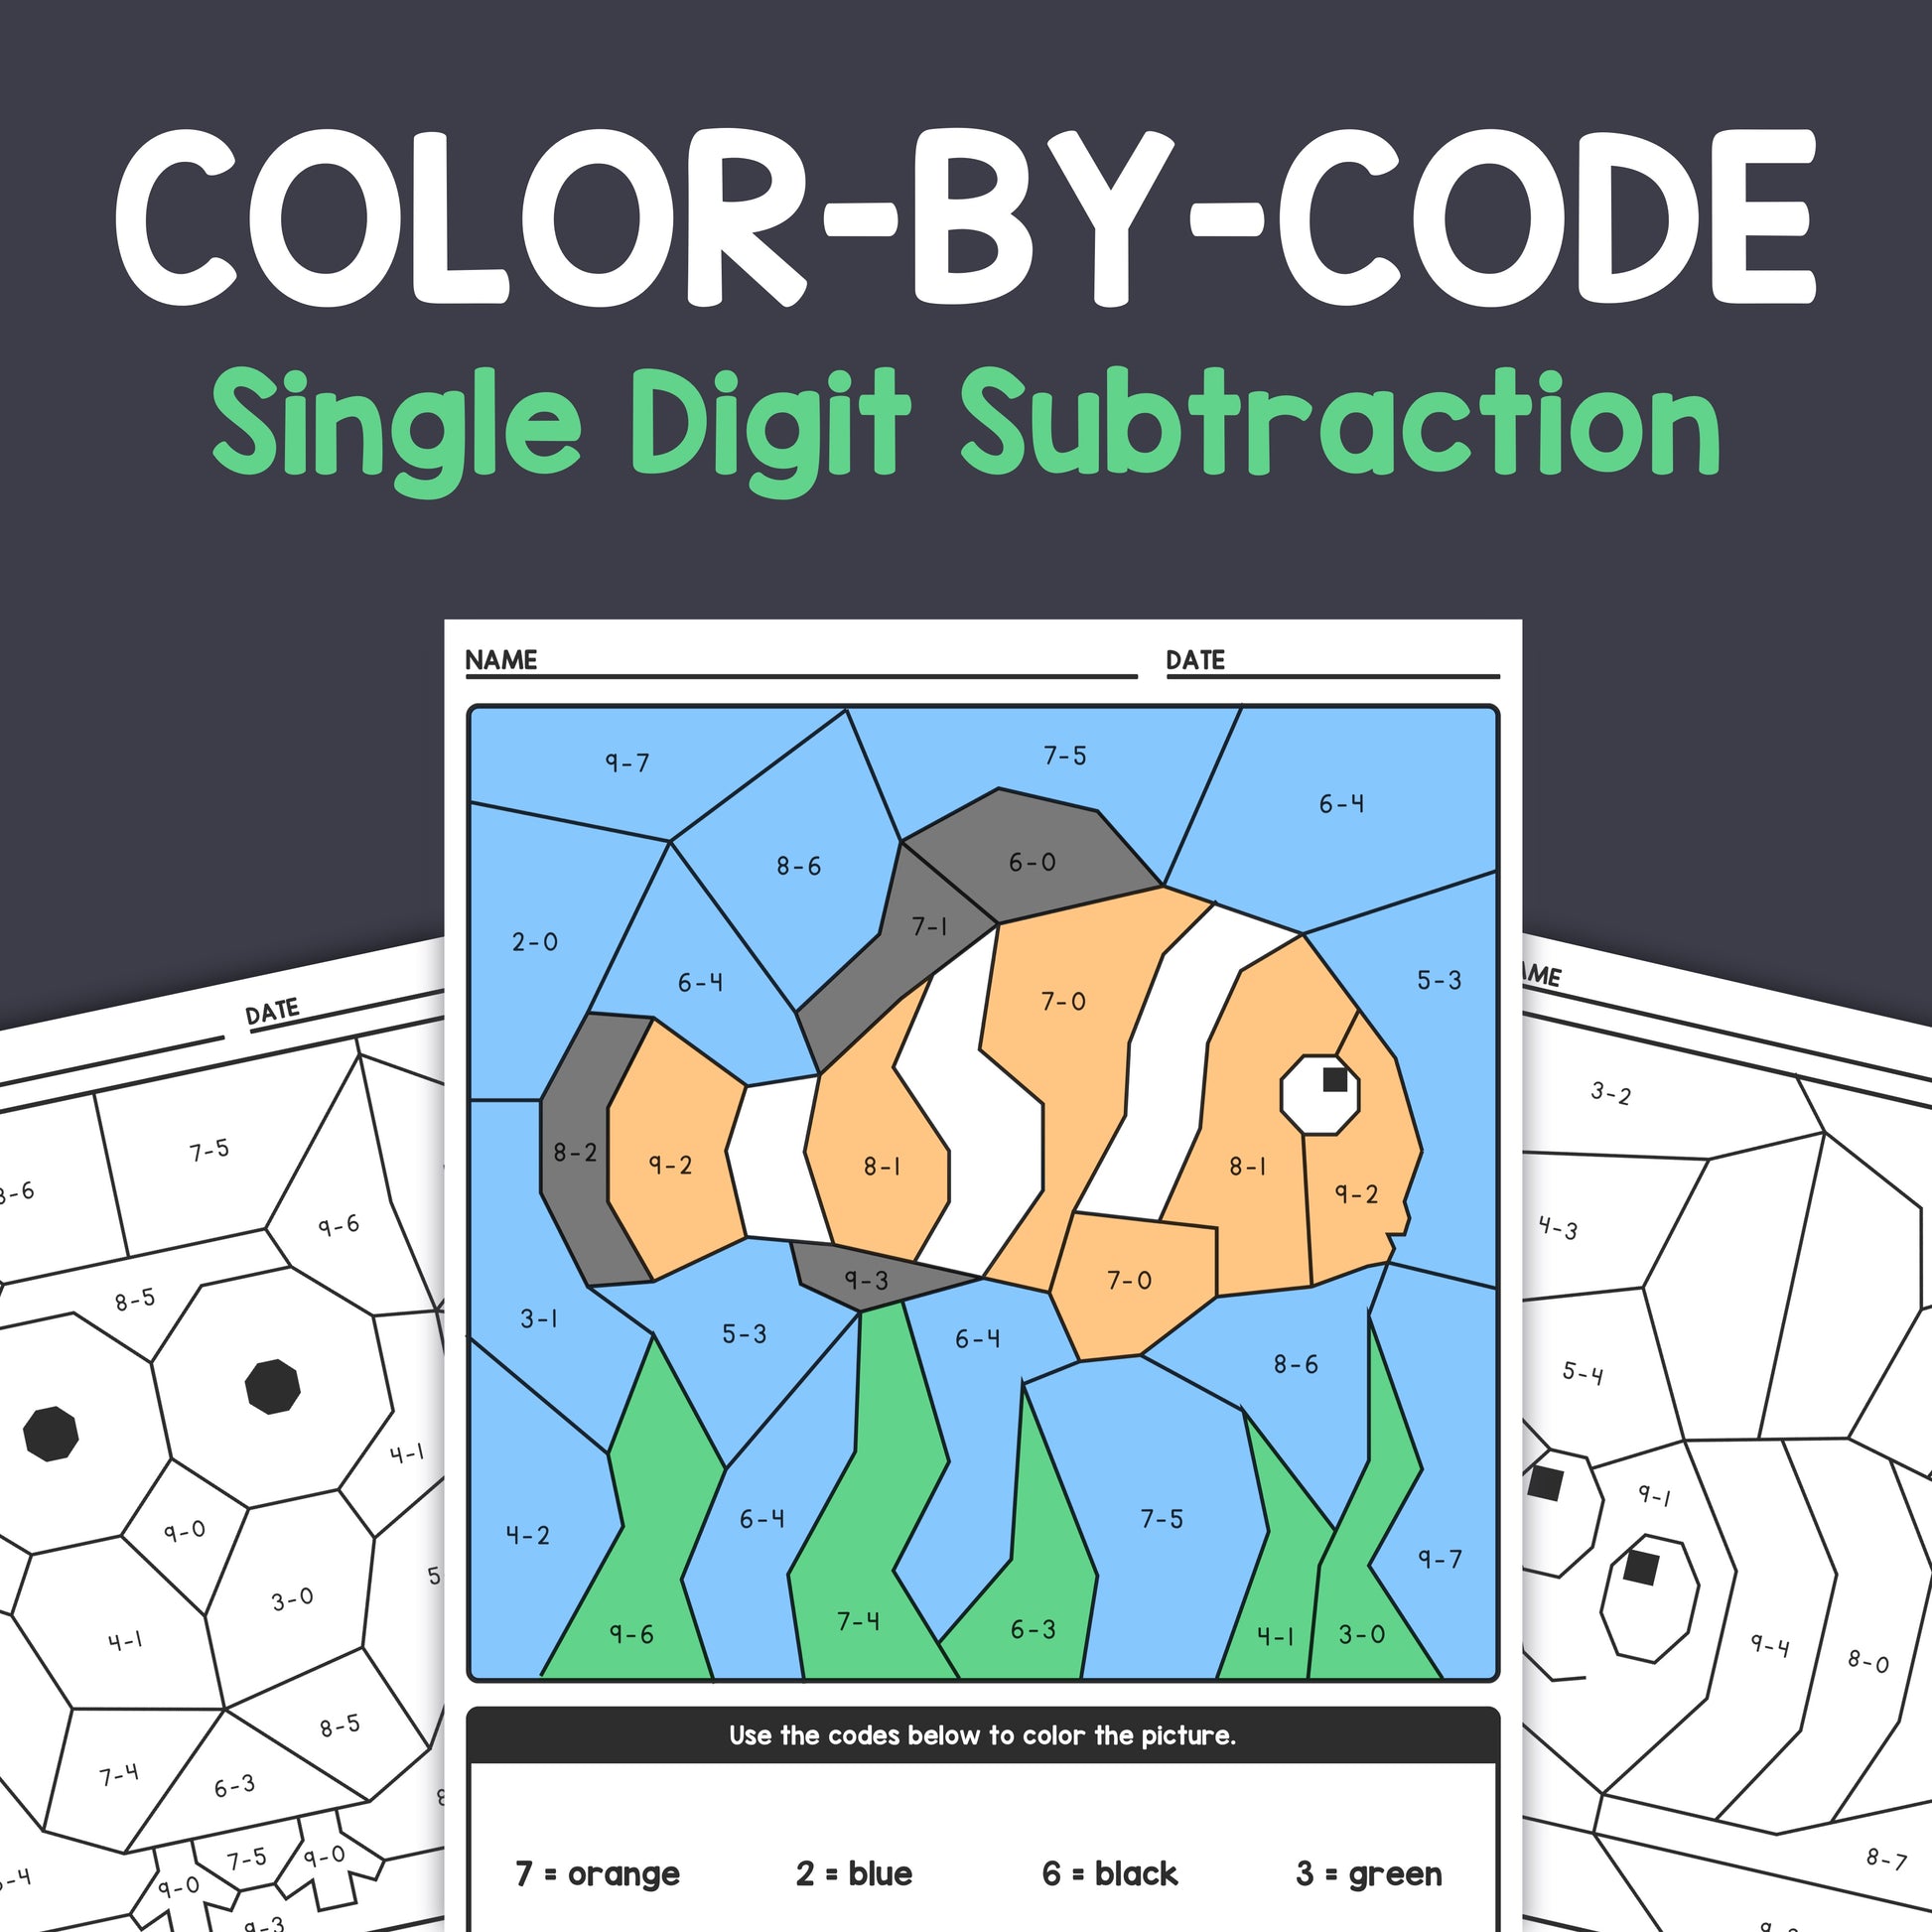 Single digit subtraction coloring activity